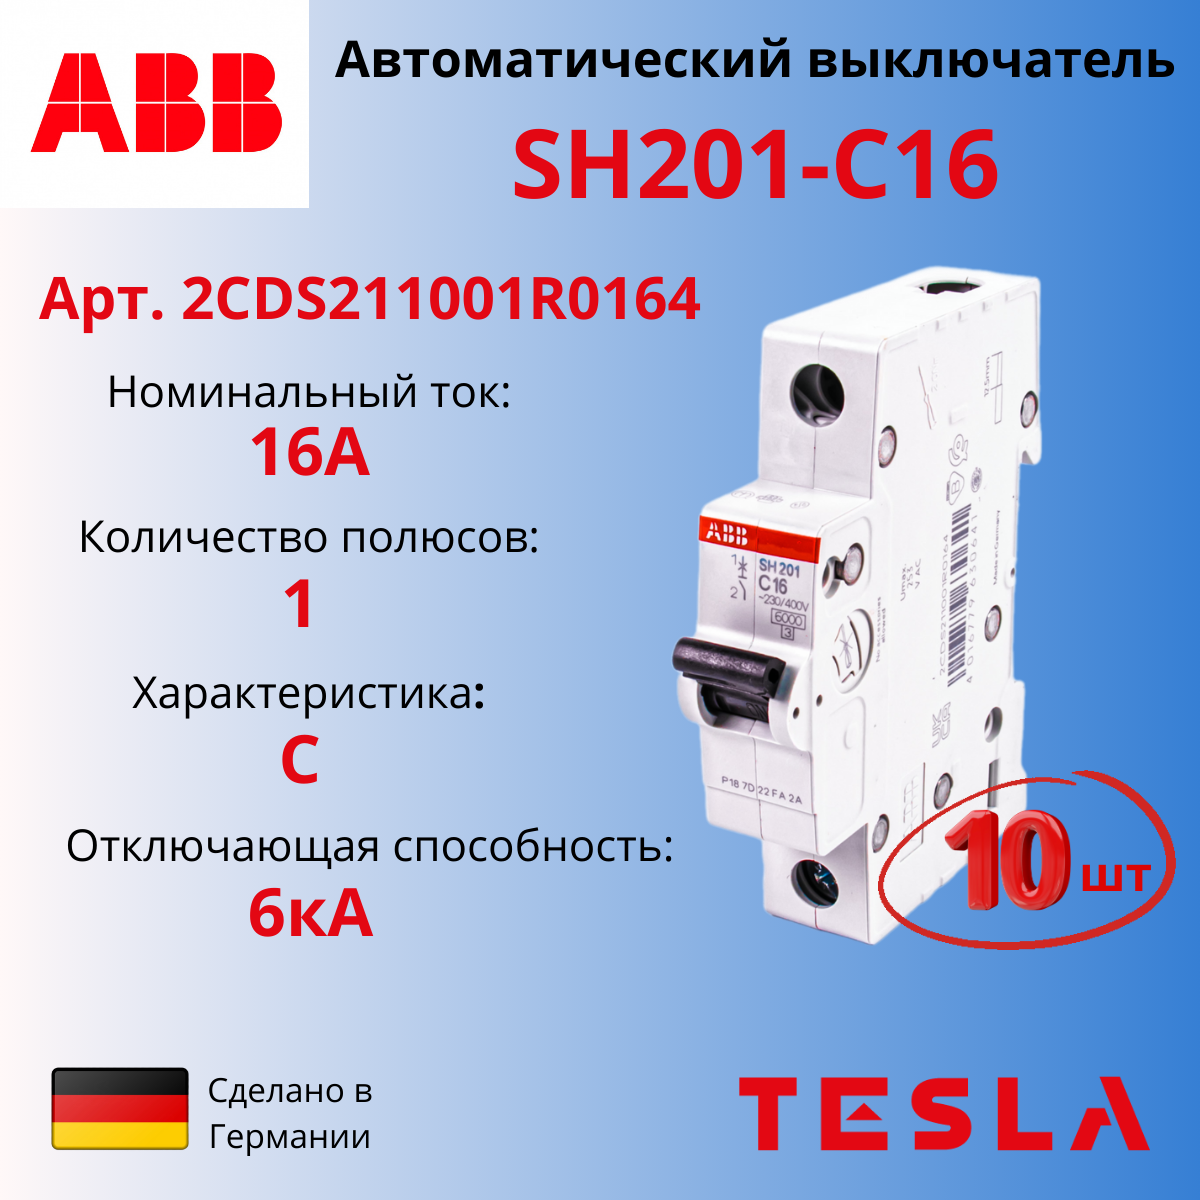 фото Автоматический выключатель abb sh201 c16, 1р, 16а 6ка, тип с, 2cds211001r0164, 10 шт